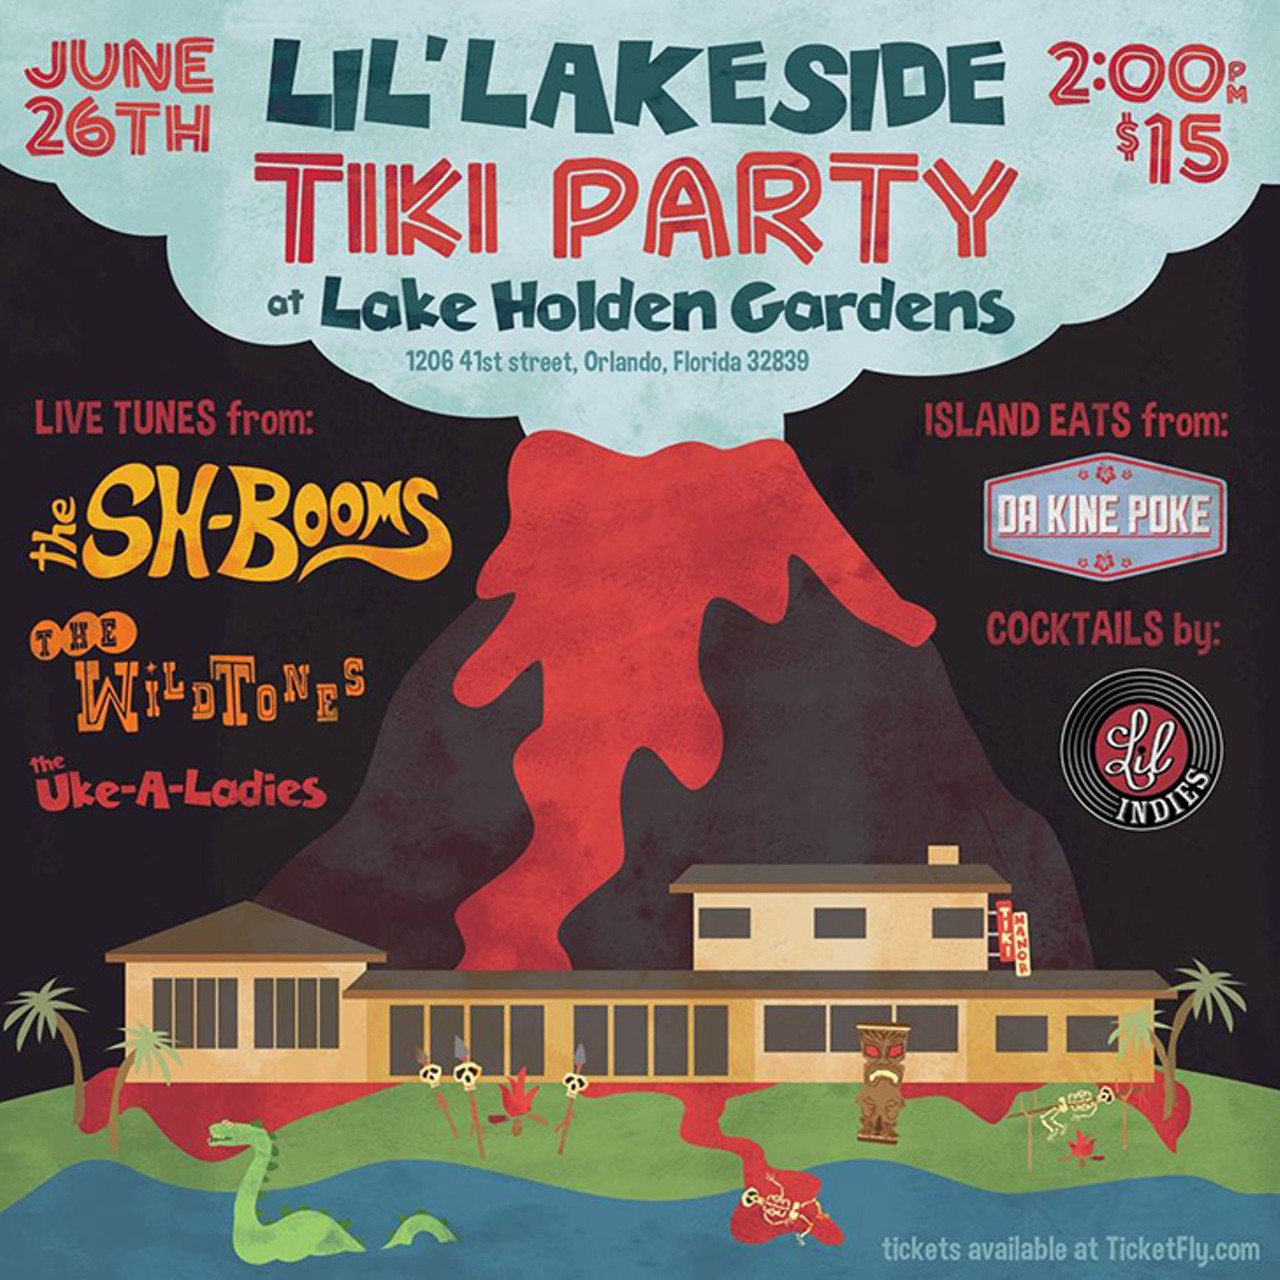 Sunday, June 26Lil Lakeside Tiki Party at Lake Holden Gardens